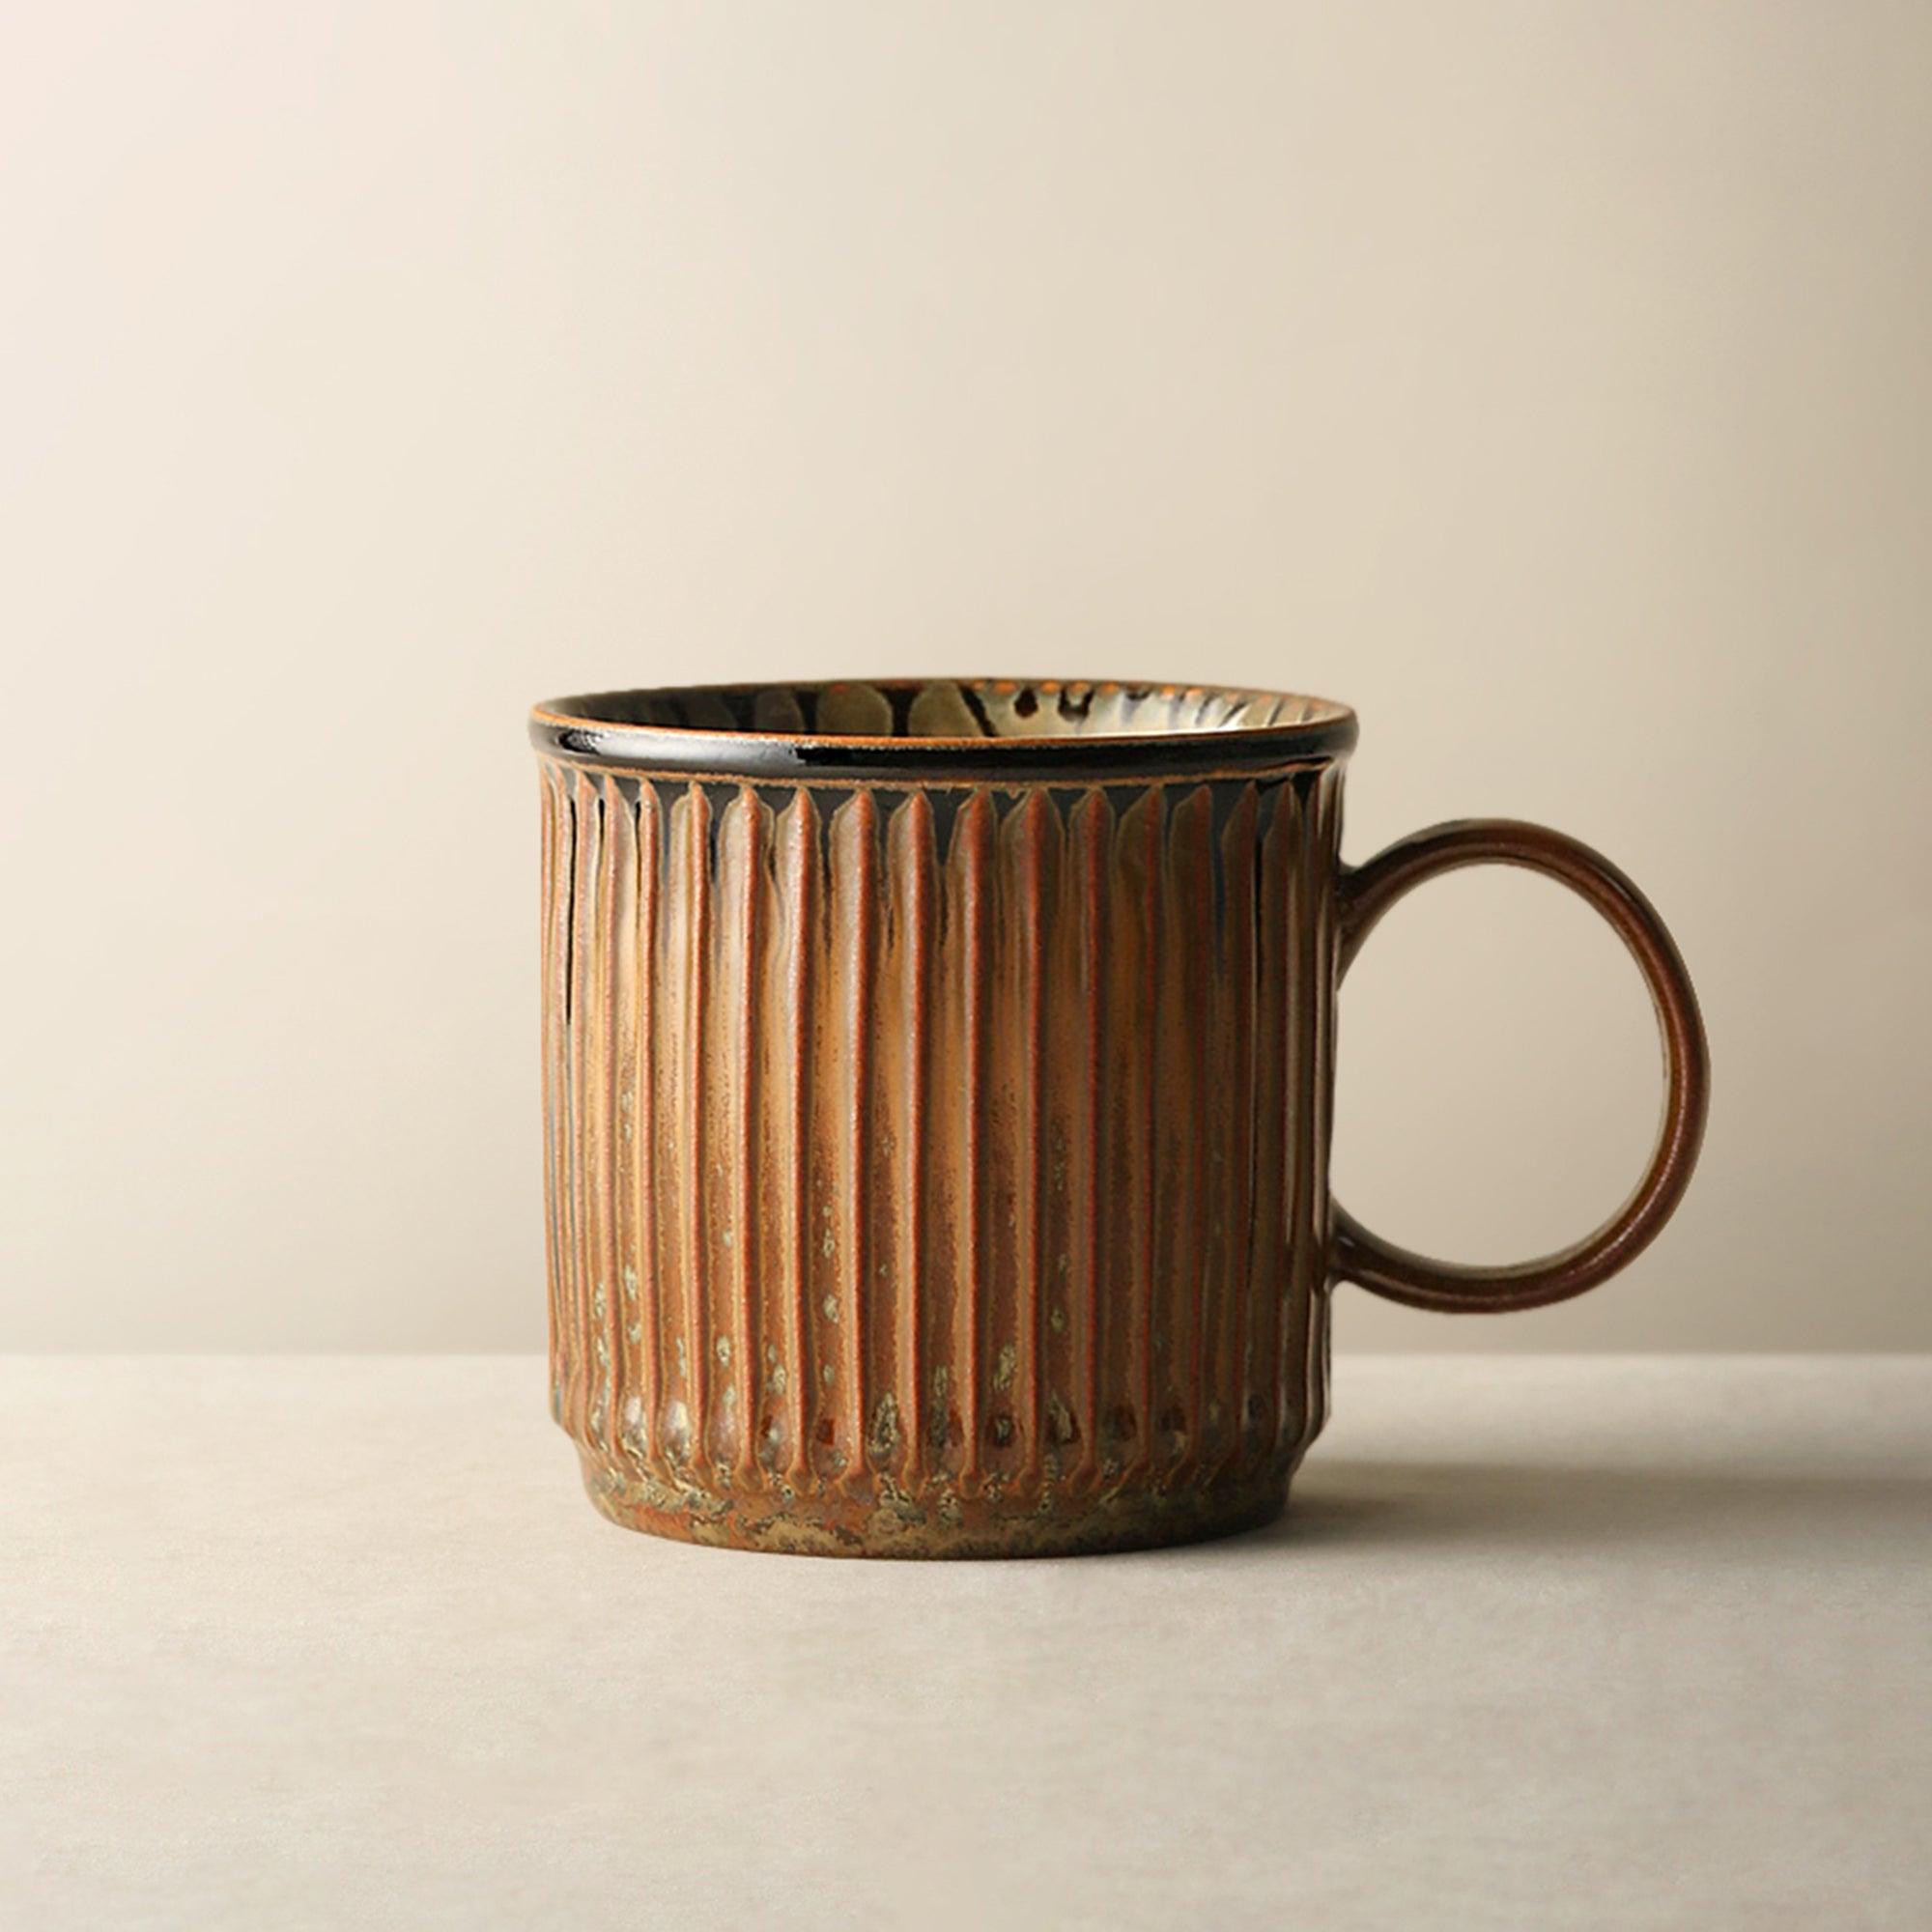 Retro Flower Glass Coffee Mug, Large Glass Tea Cup. Cute Retro